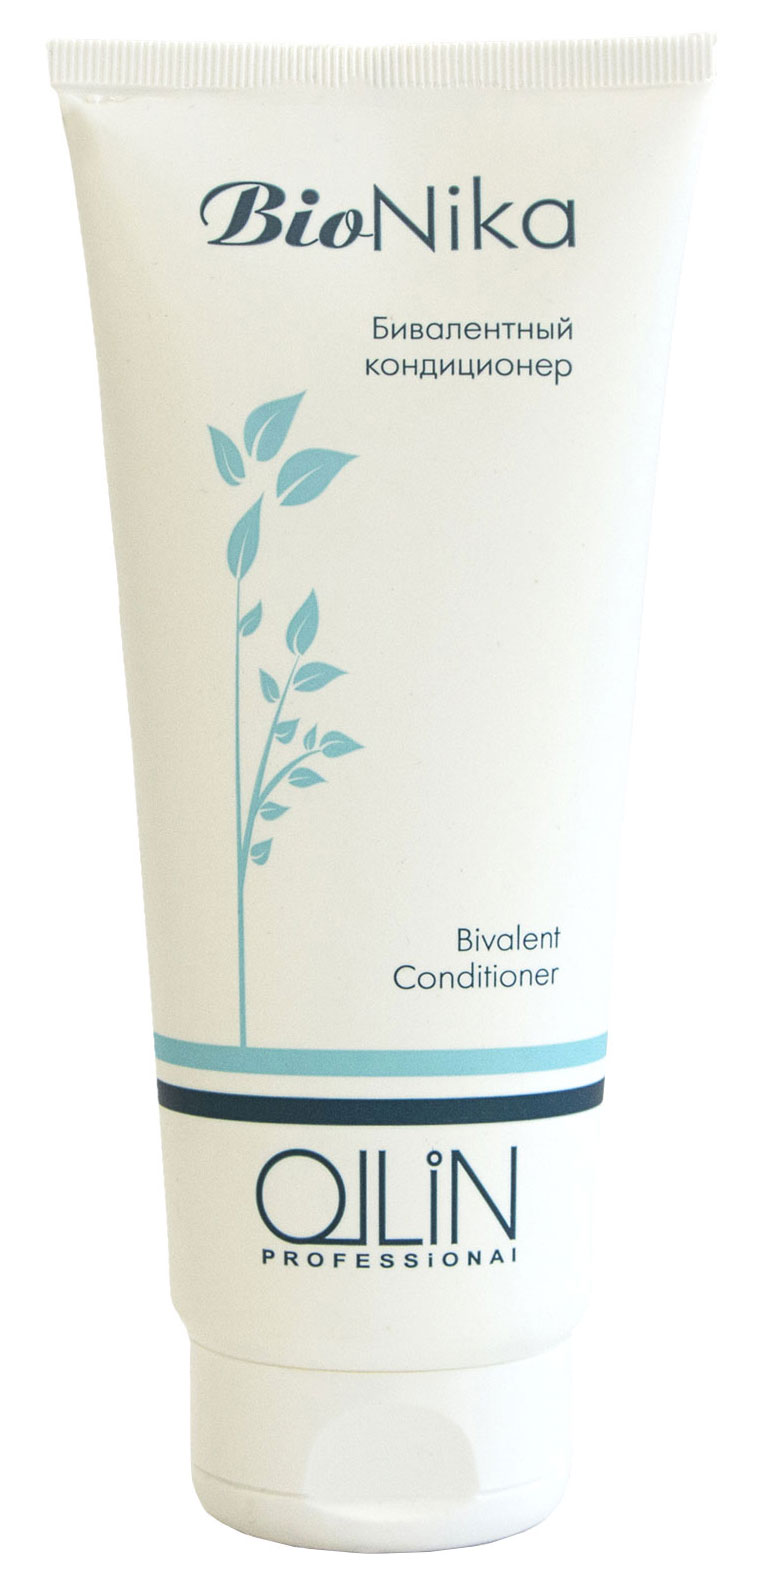 Кондиционер для волос Ollin Professional BioNika Bivalent 200 мл